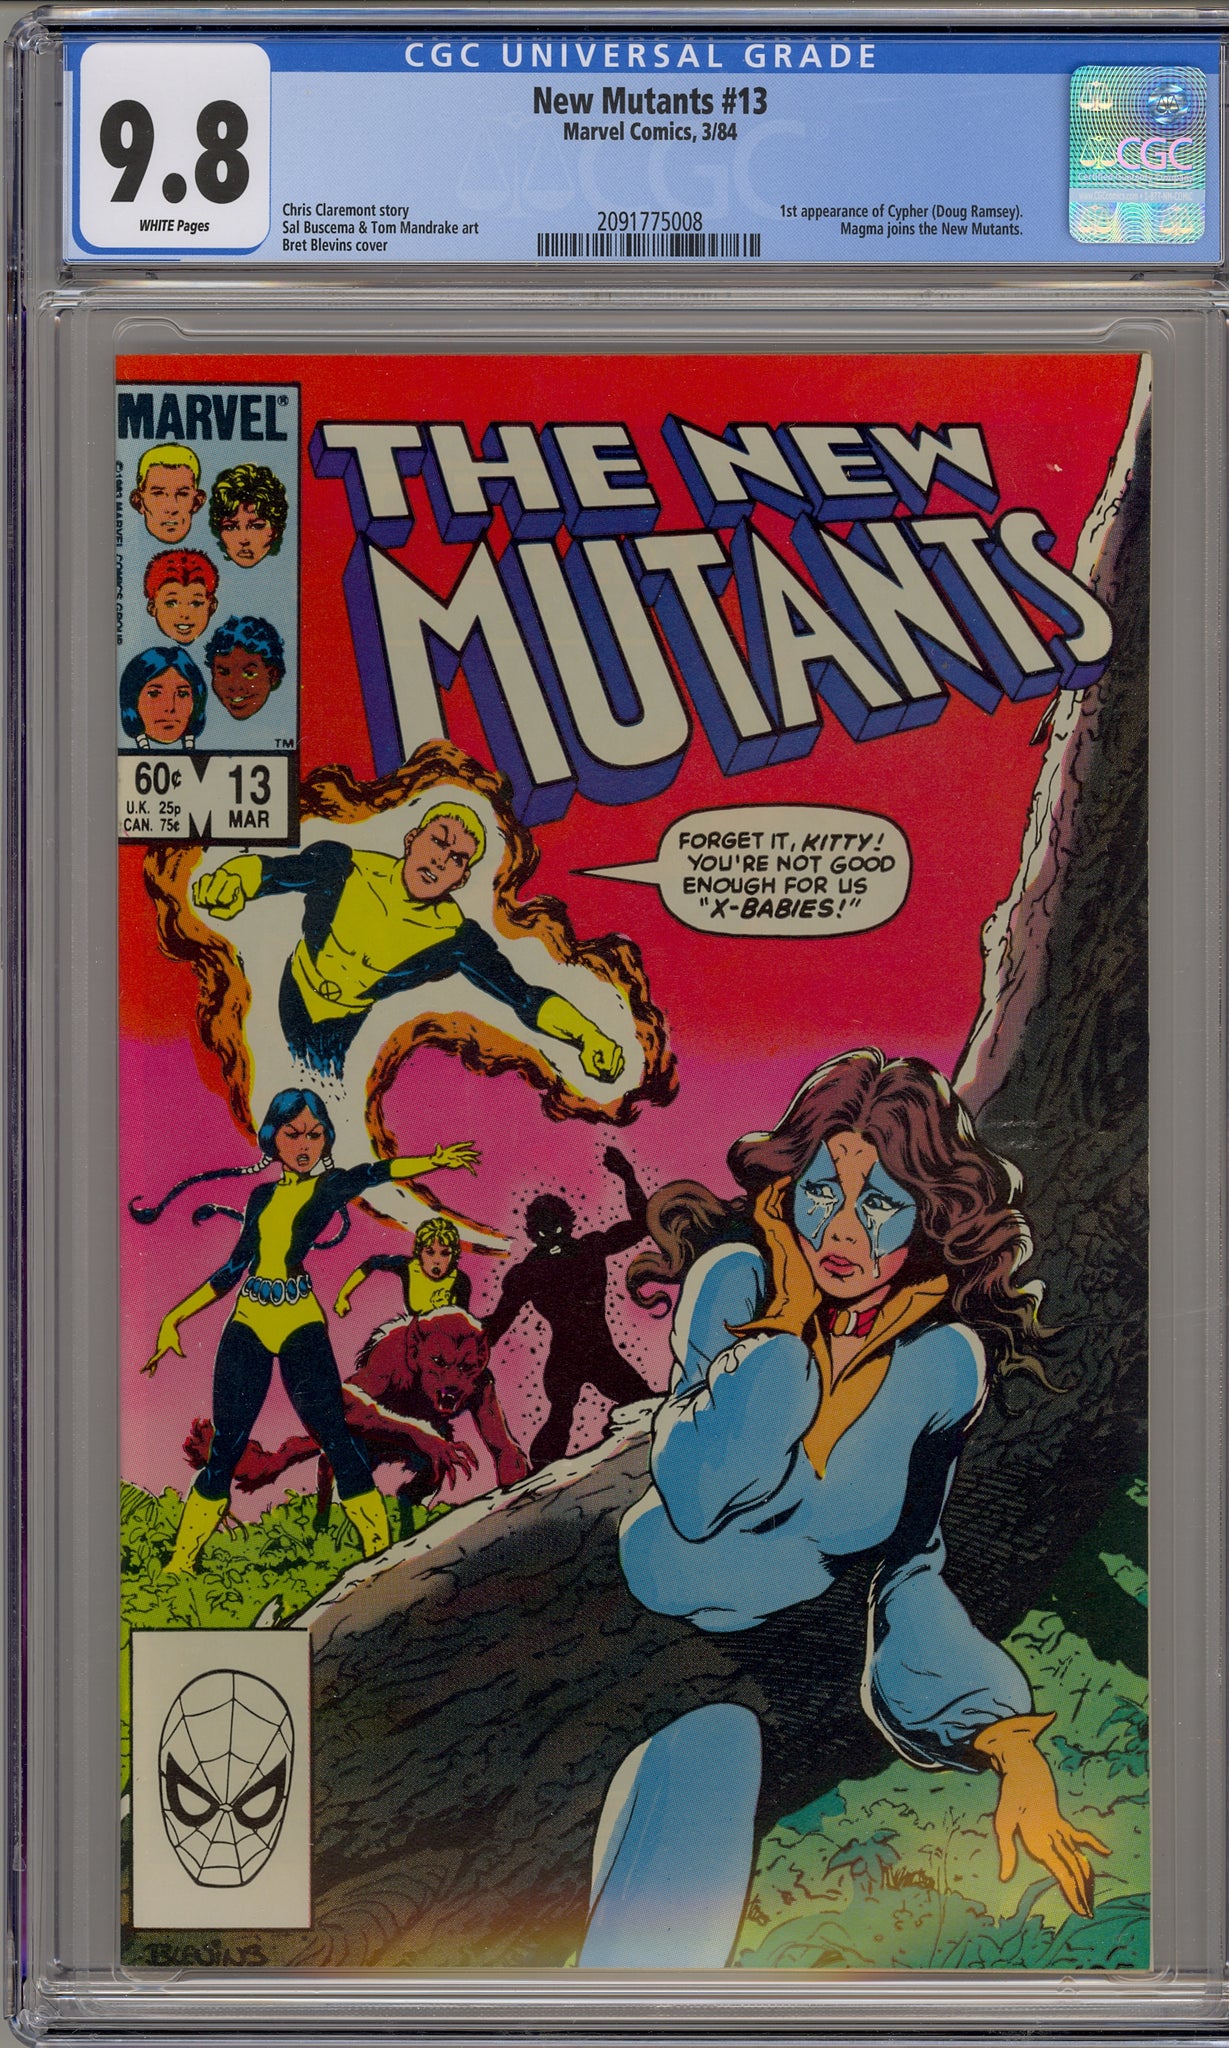 New Mutants #13 (1984) Cypher, Magma